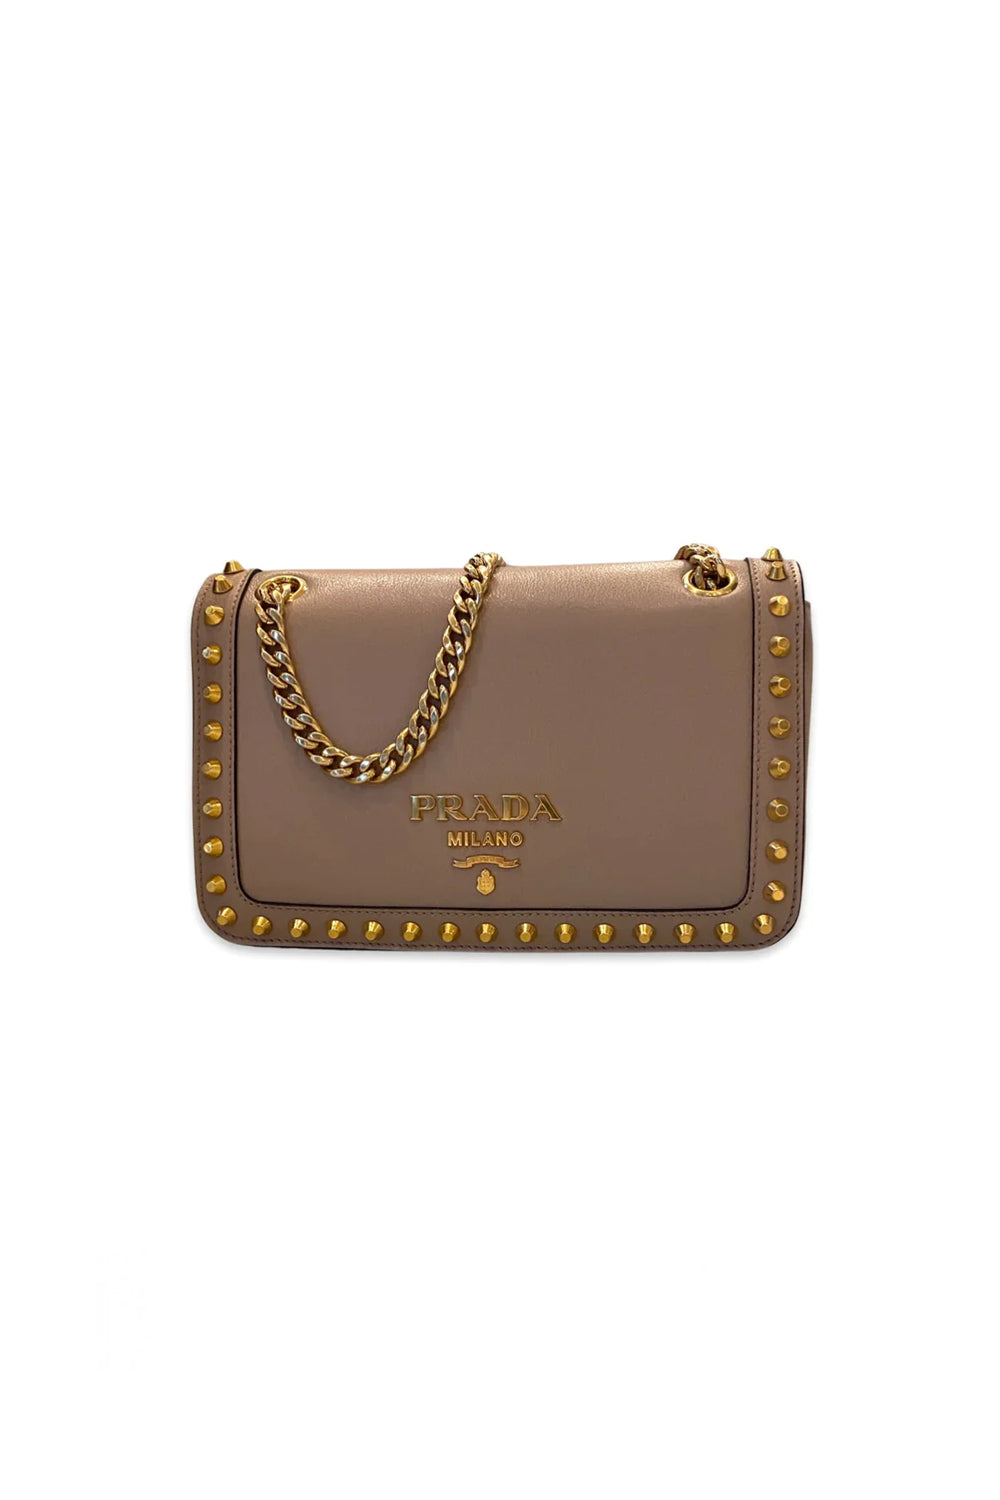 Prada Pattina Glace Calf Leather Cammeo Beige Gold Studded Bag